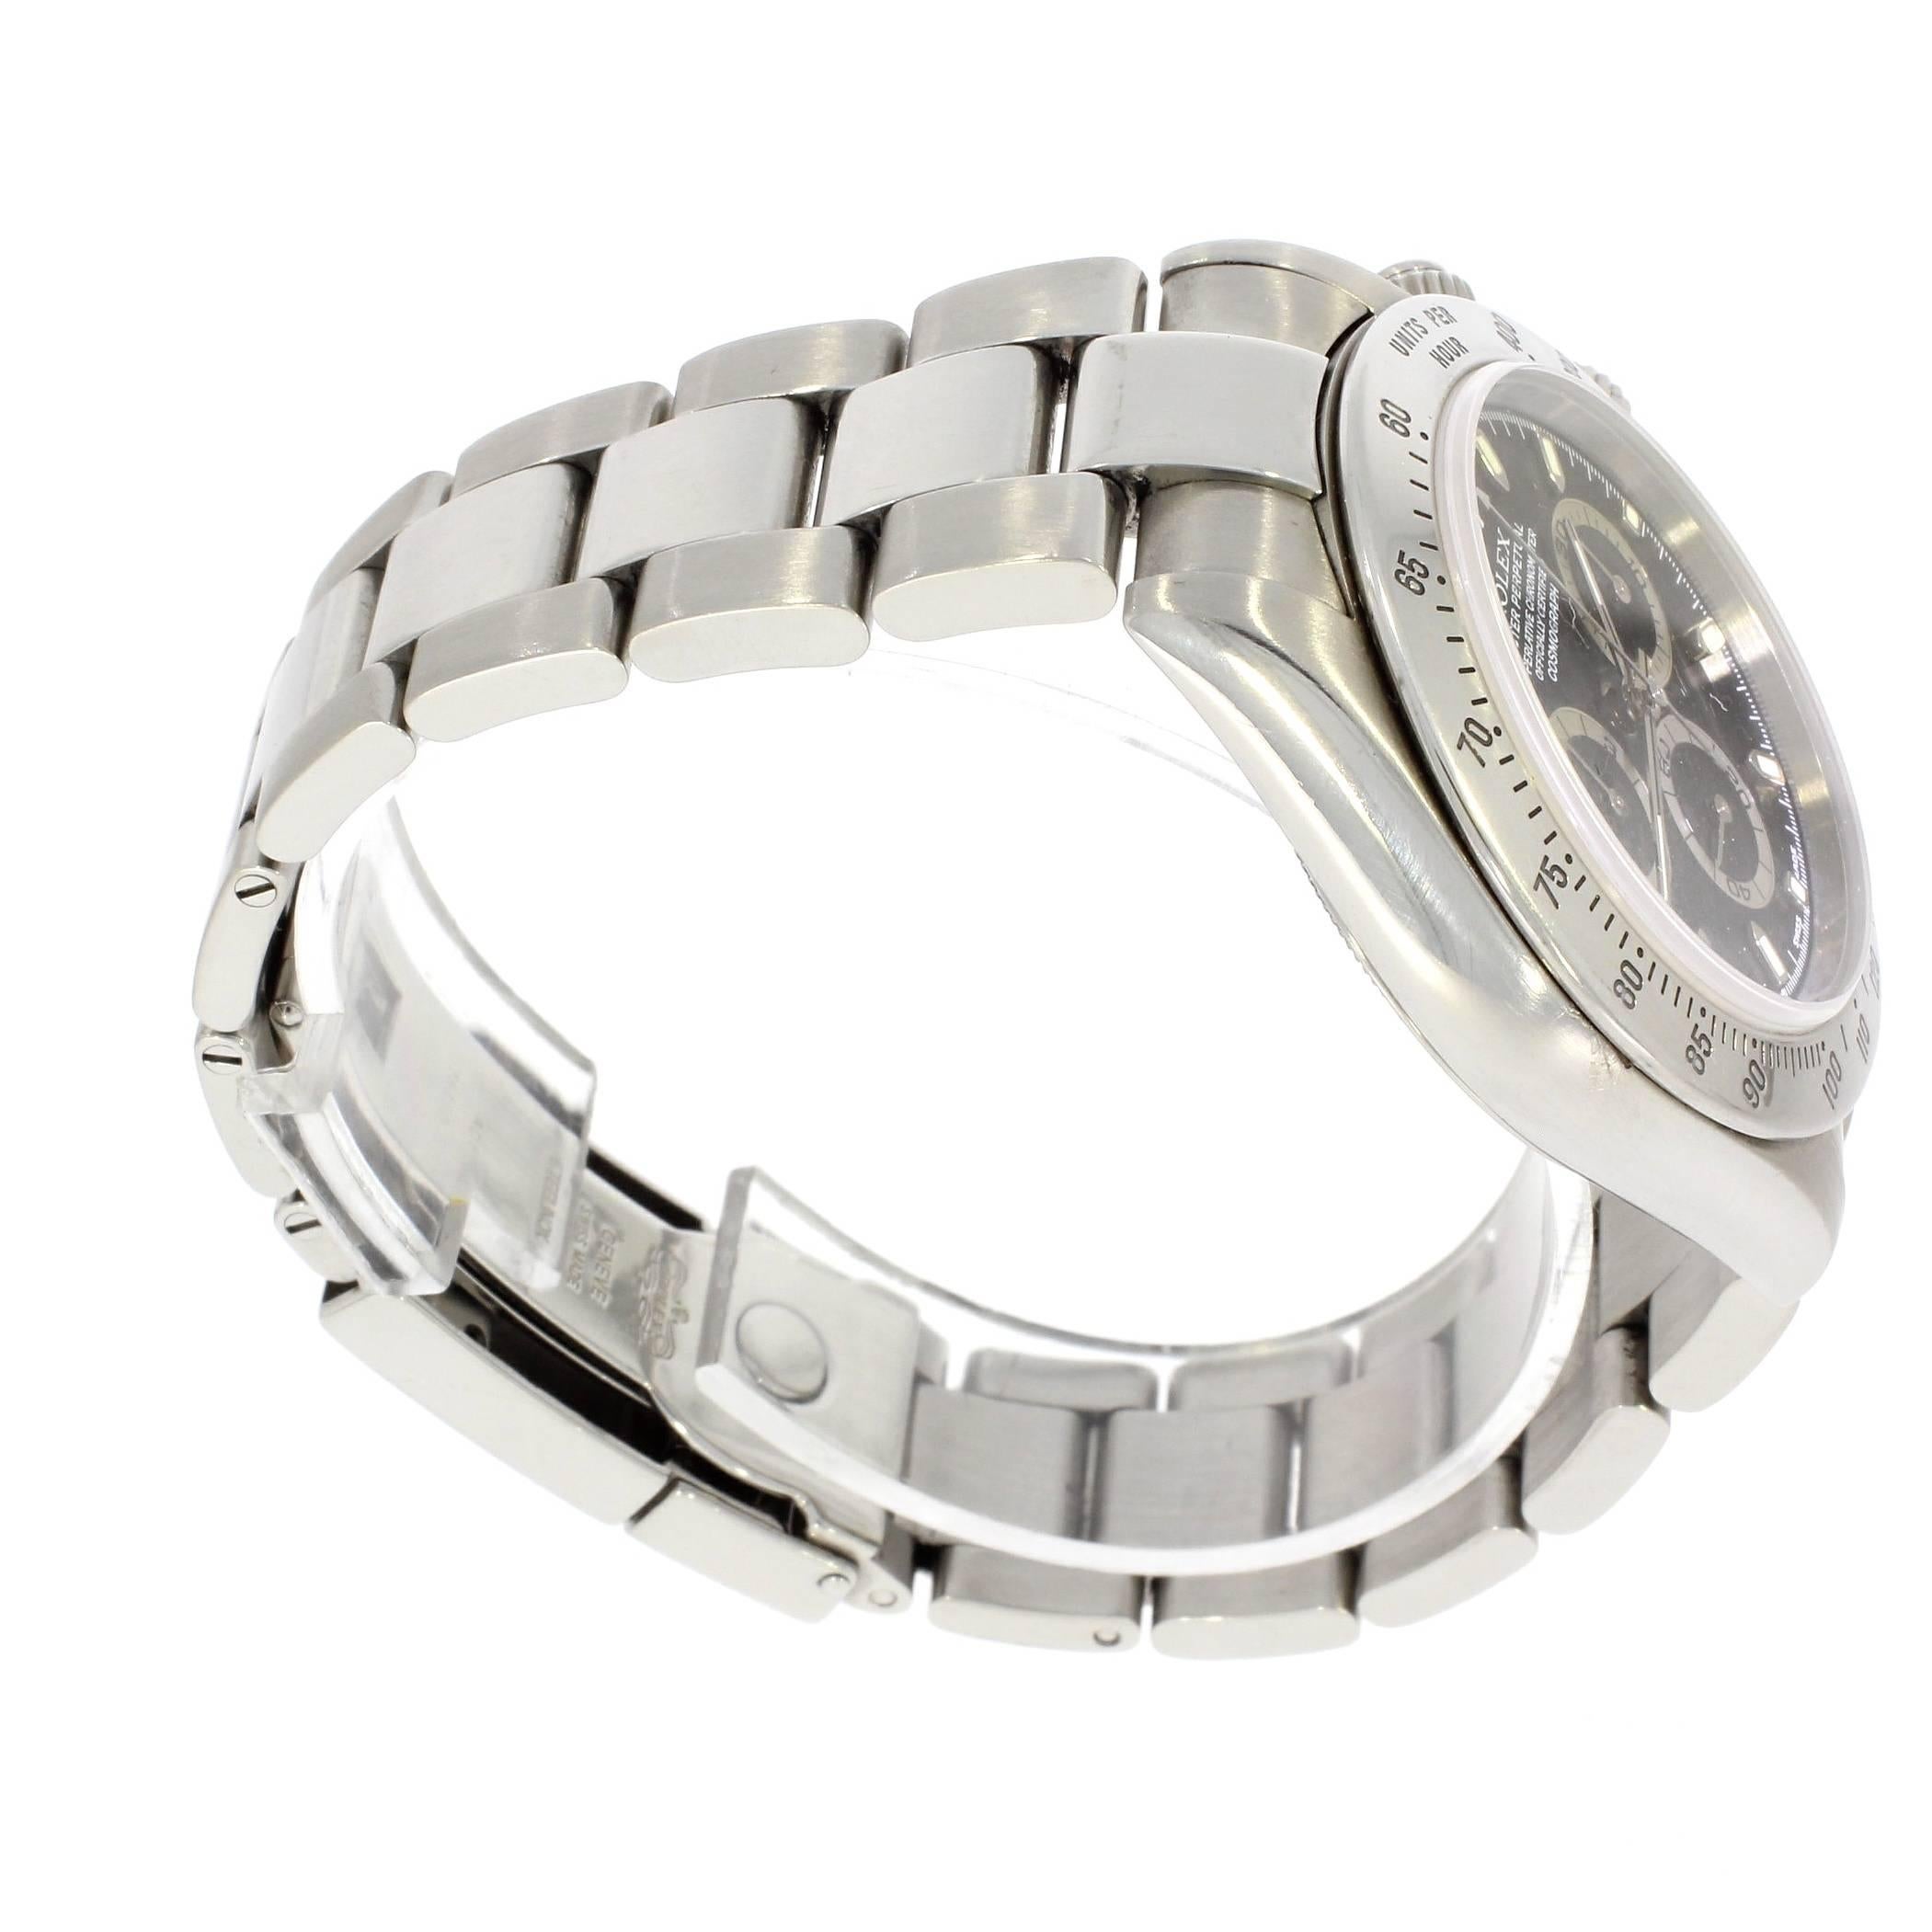 Rolex Daytona Stainless Steel Chronograph 116520 Automatic Wrist Watch 4